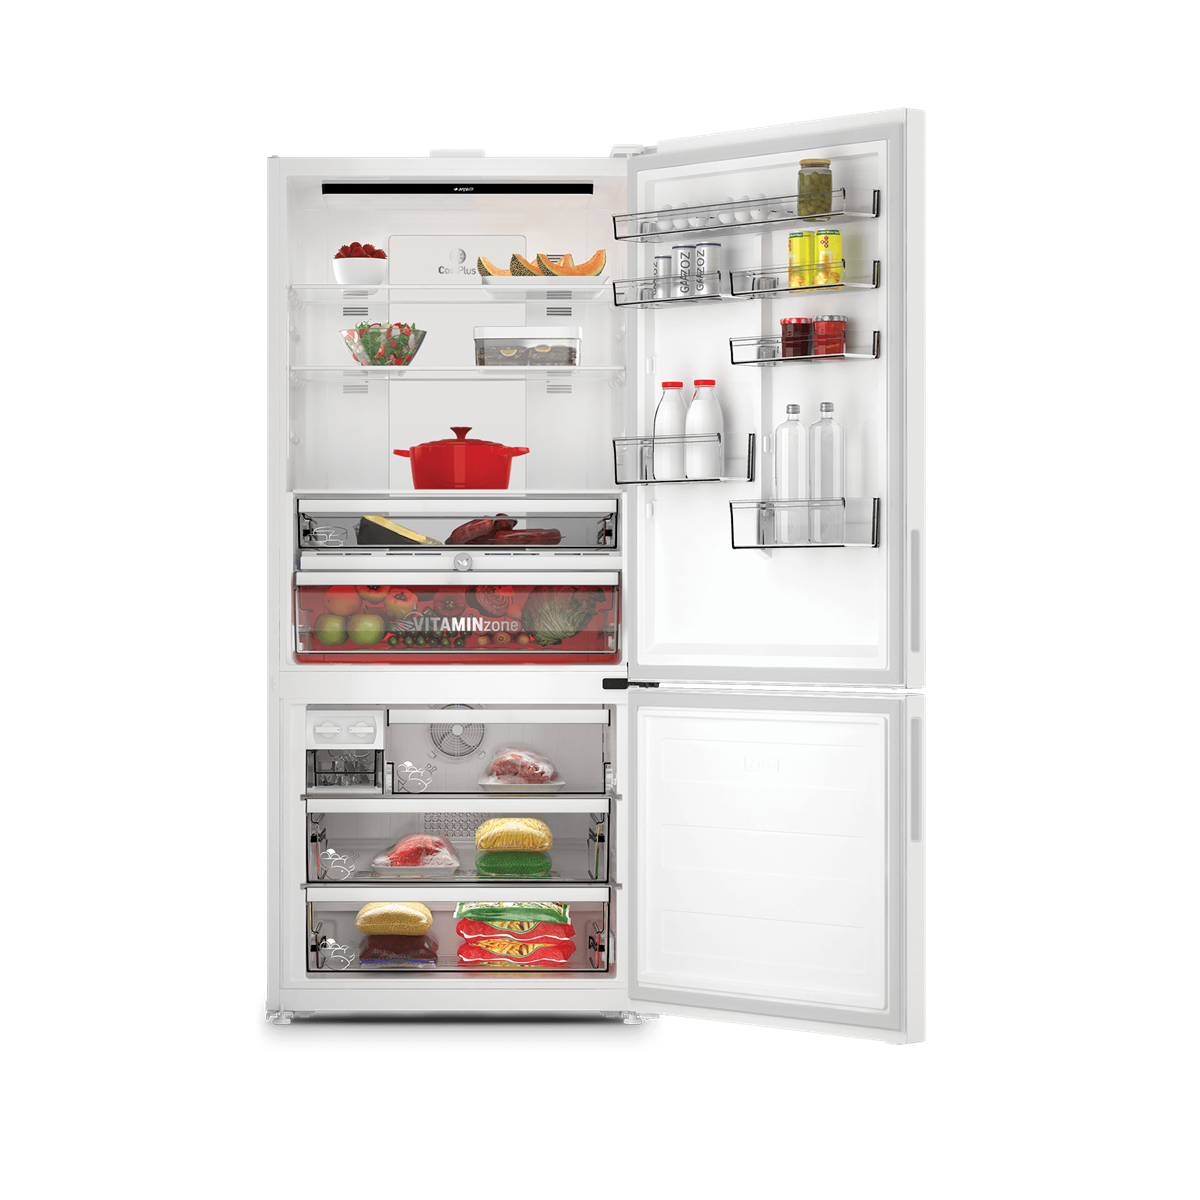 Arçelik 283721 EB No Frost Buzdolabı - Arçelik Beyaz Eşya